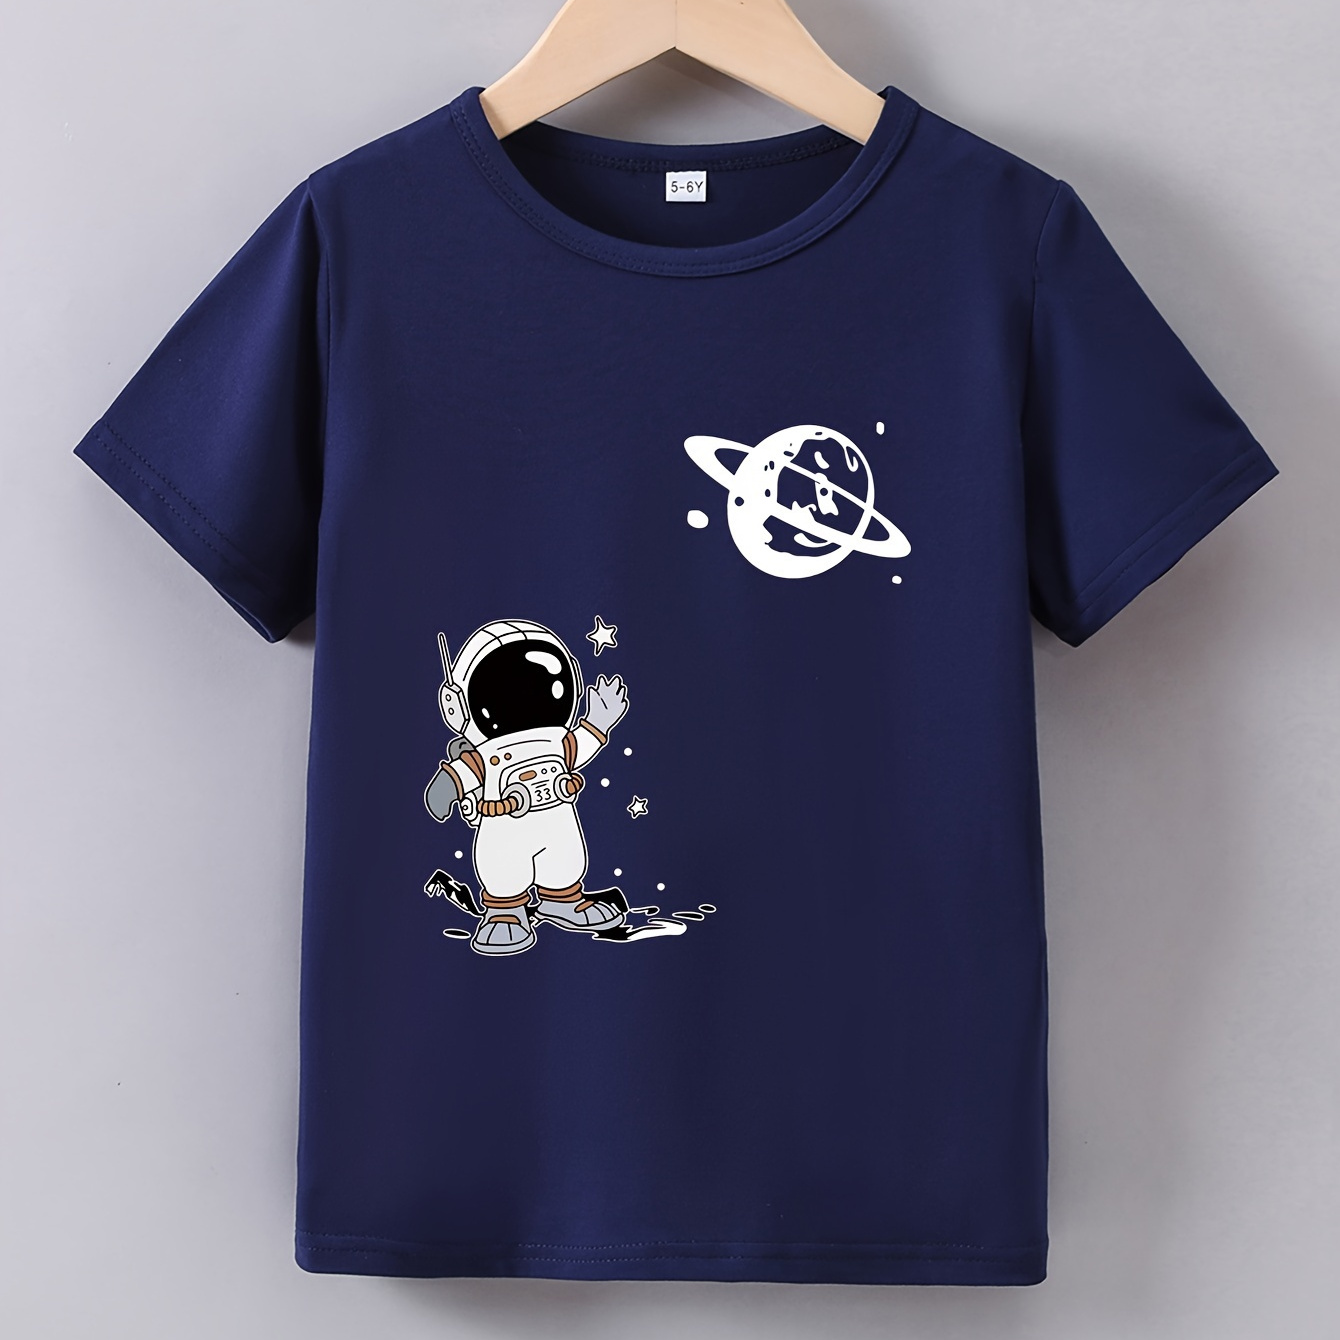 

Casual Comfy Boys' Summer Top - Cartoon Astronaut & Planet Print Short Sleeve Crew Neck T-shirt Gift